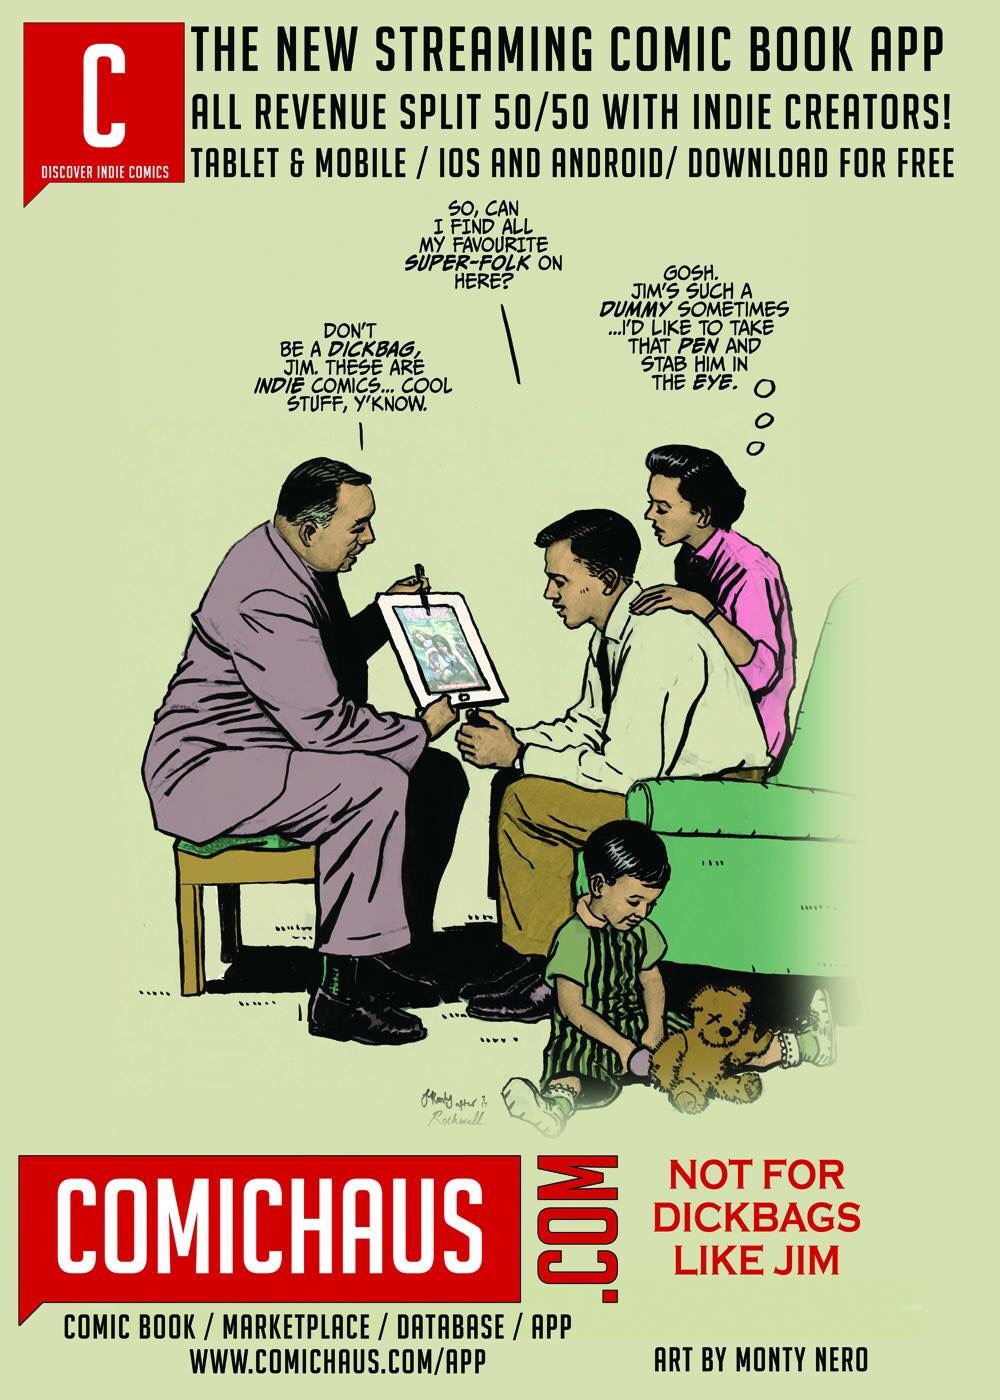 Comichaus App - Promotional Poster